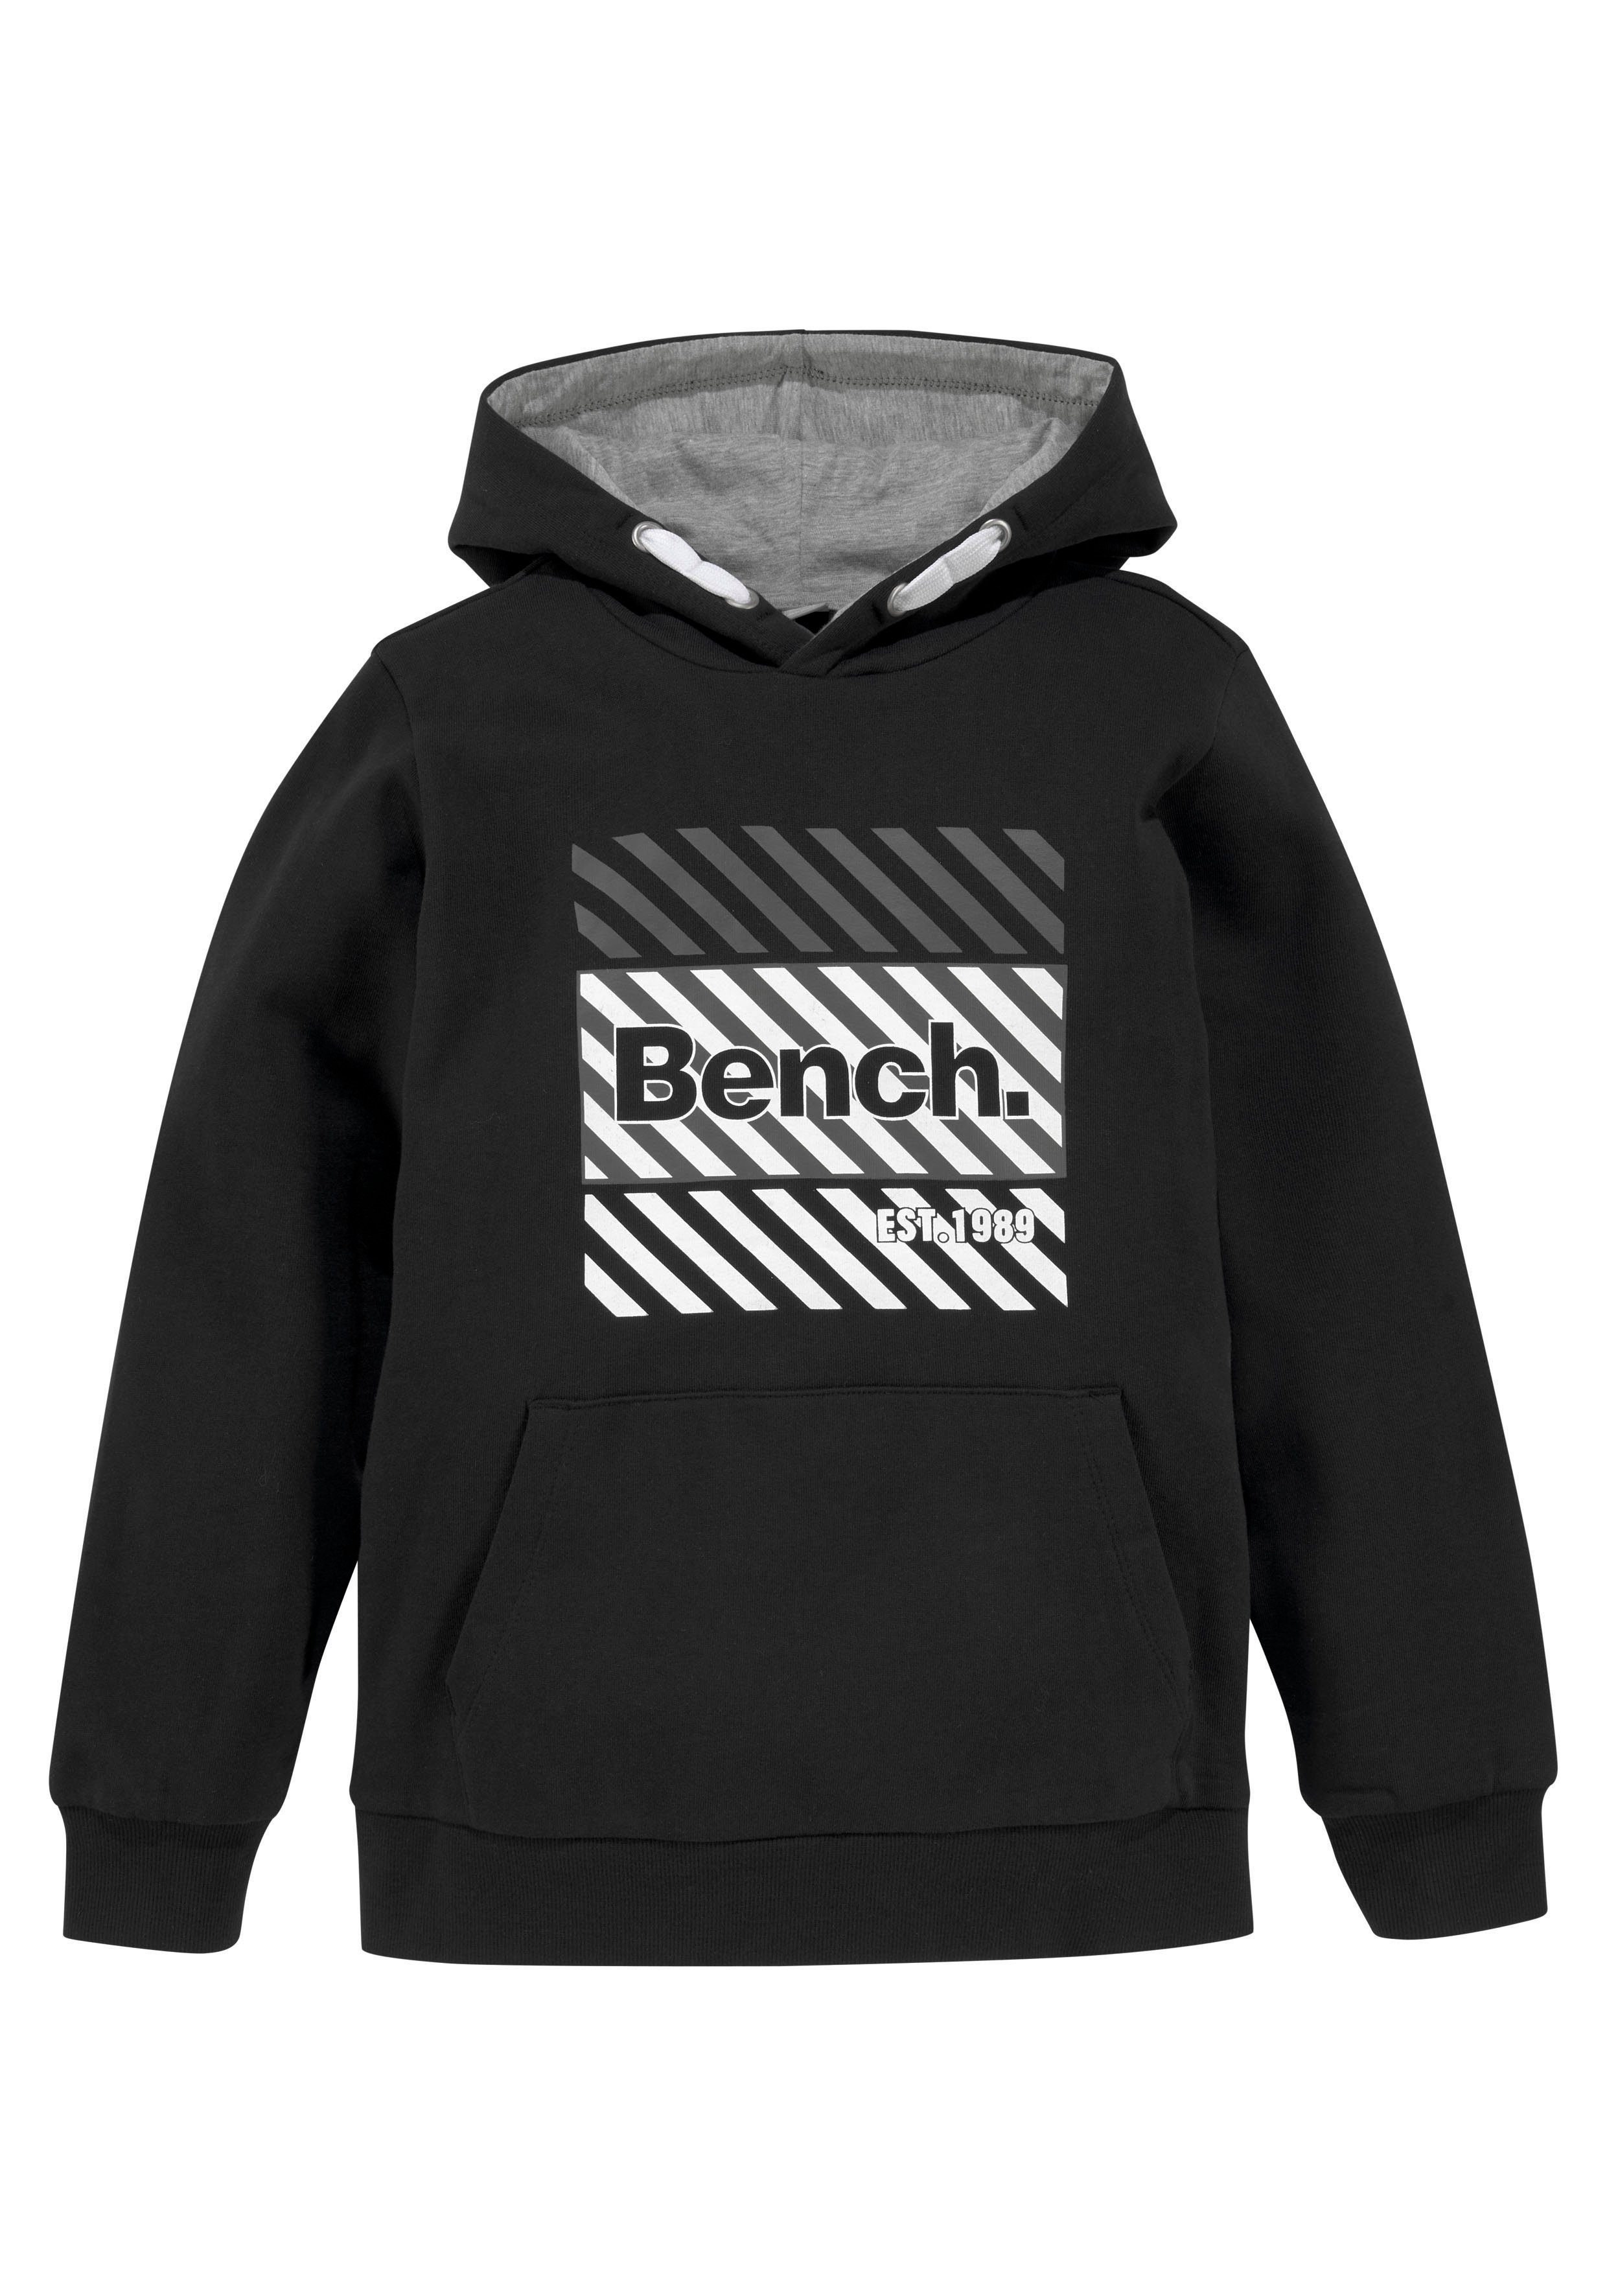 trendigem Kapuzensweatshirt Bench. Black&White mit Druck